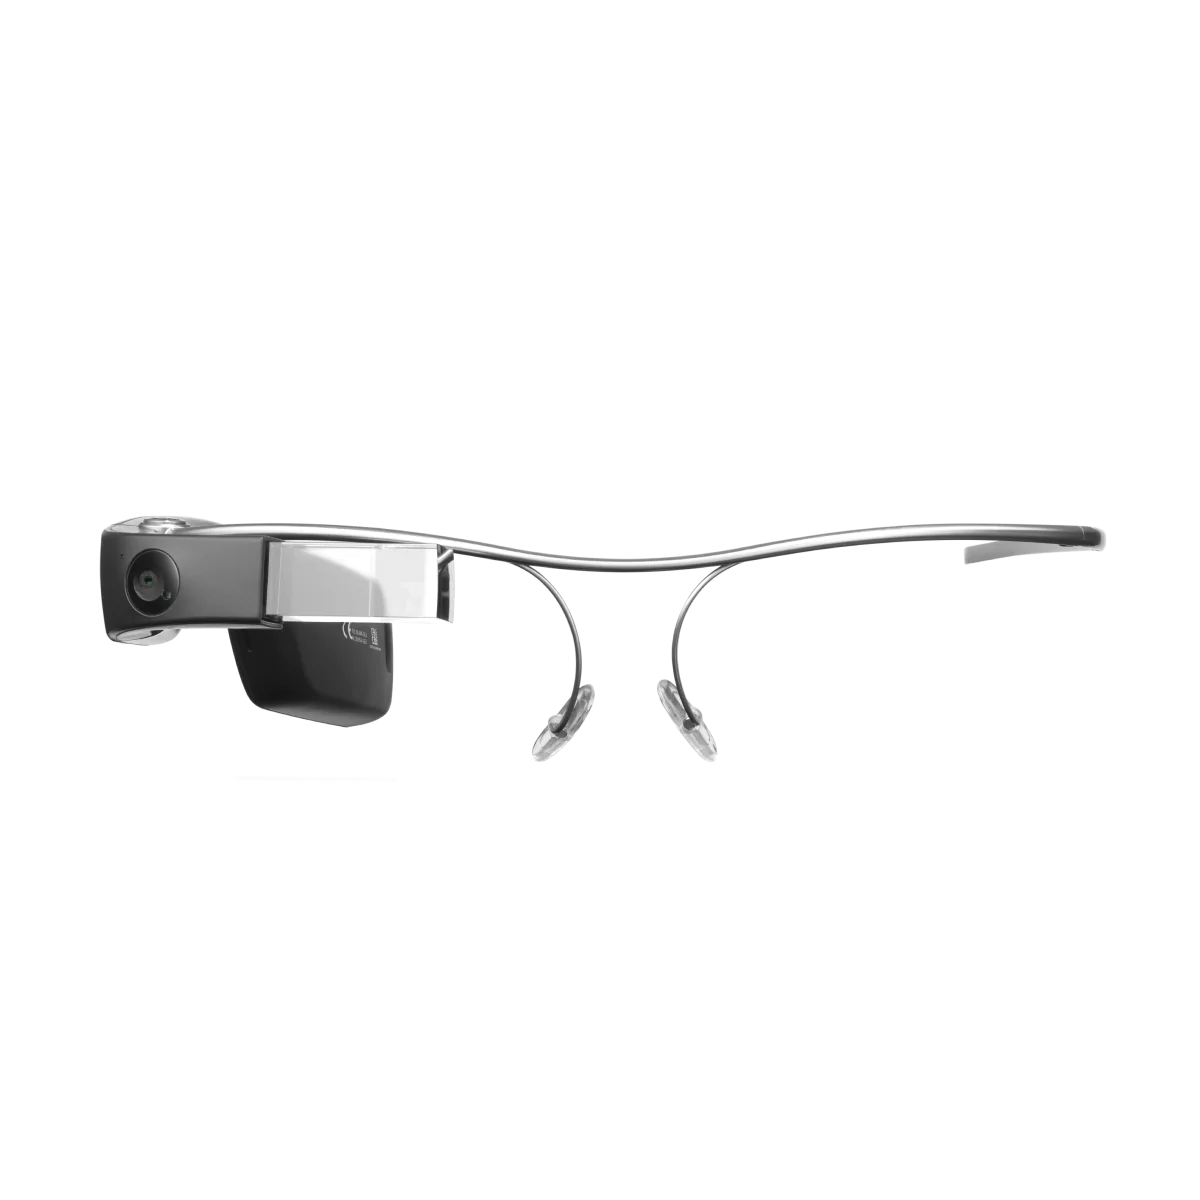 Envision Glasses: Read Edition - AI-powered smartglasses – Envision Store